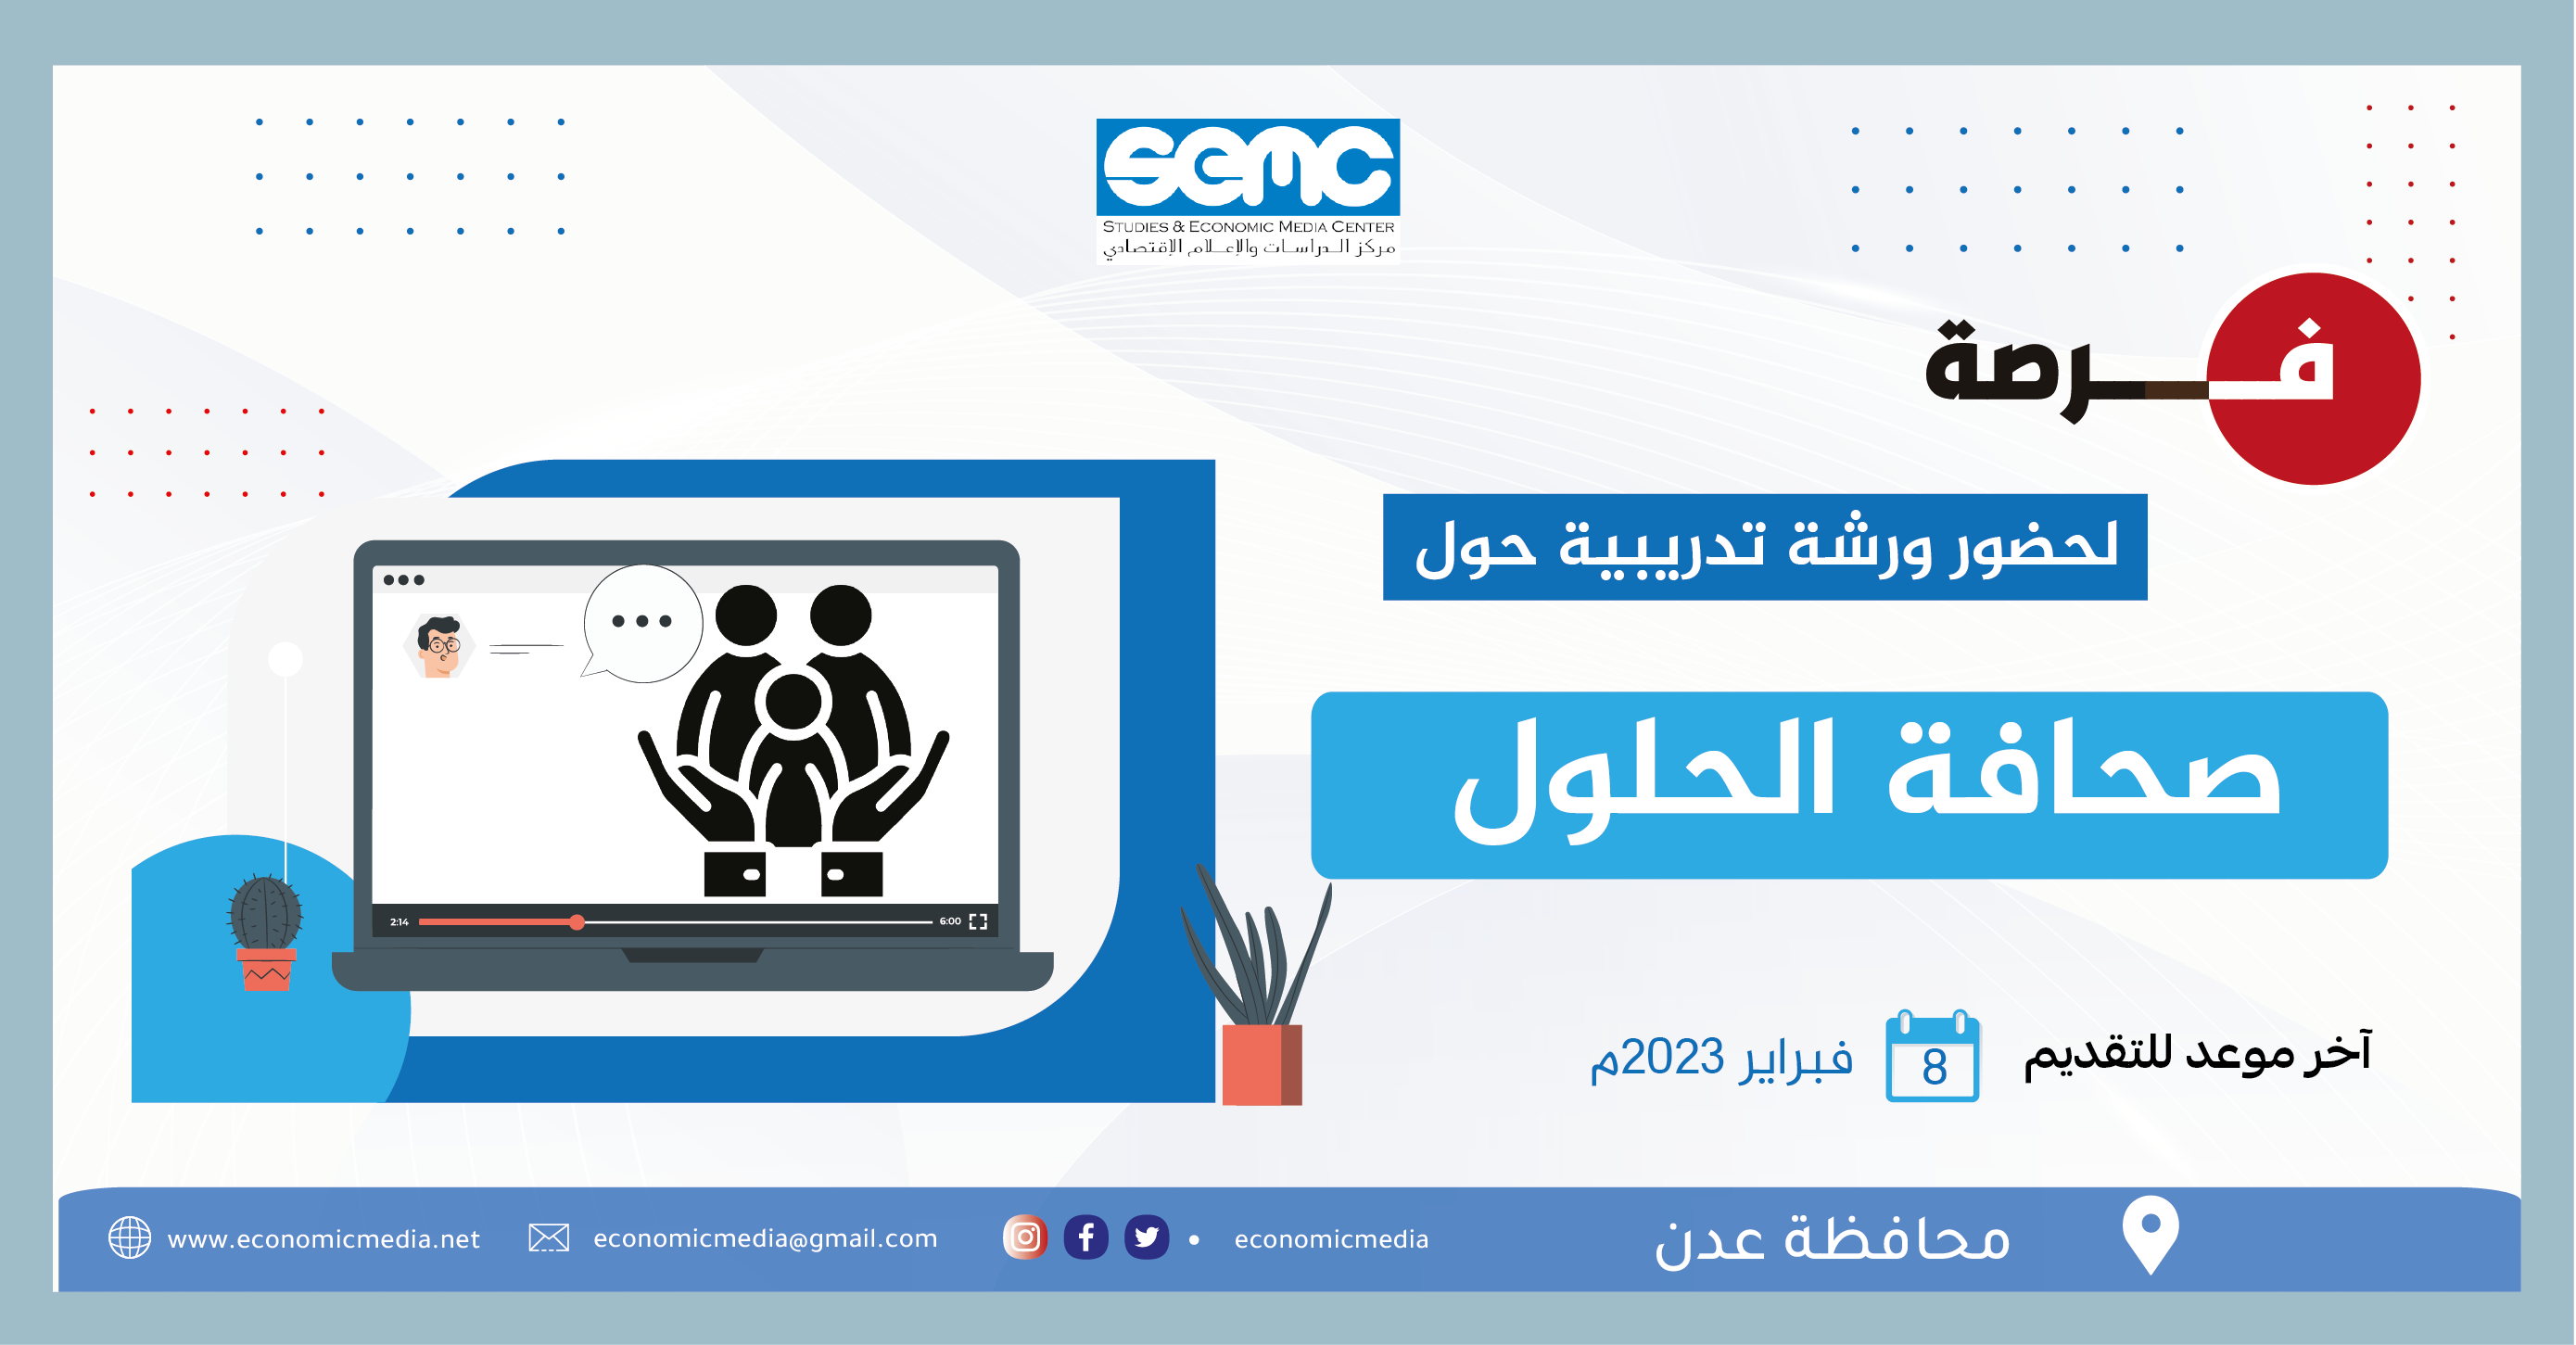 <strong>فرصة لحضور ورشة تدريبية حول صحافة الحلول في محافظة عدن </strong>